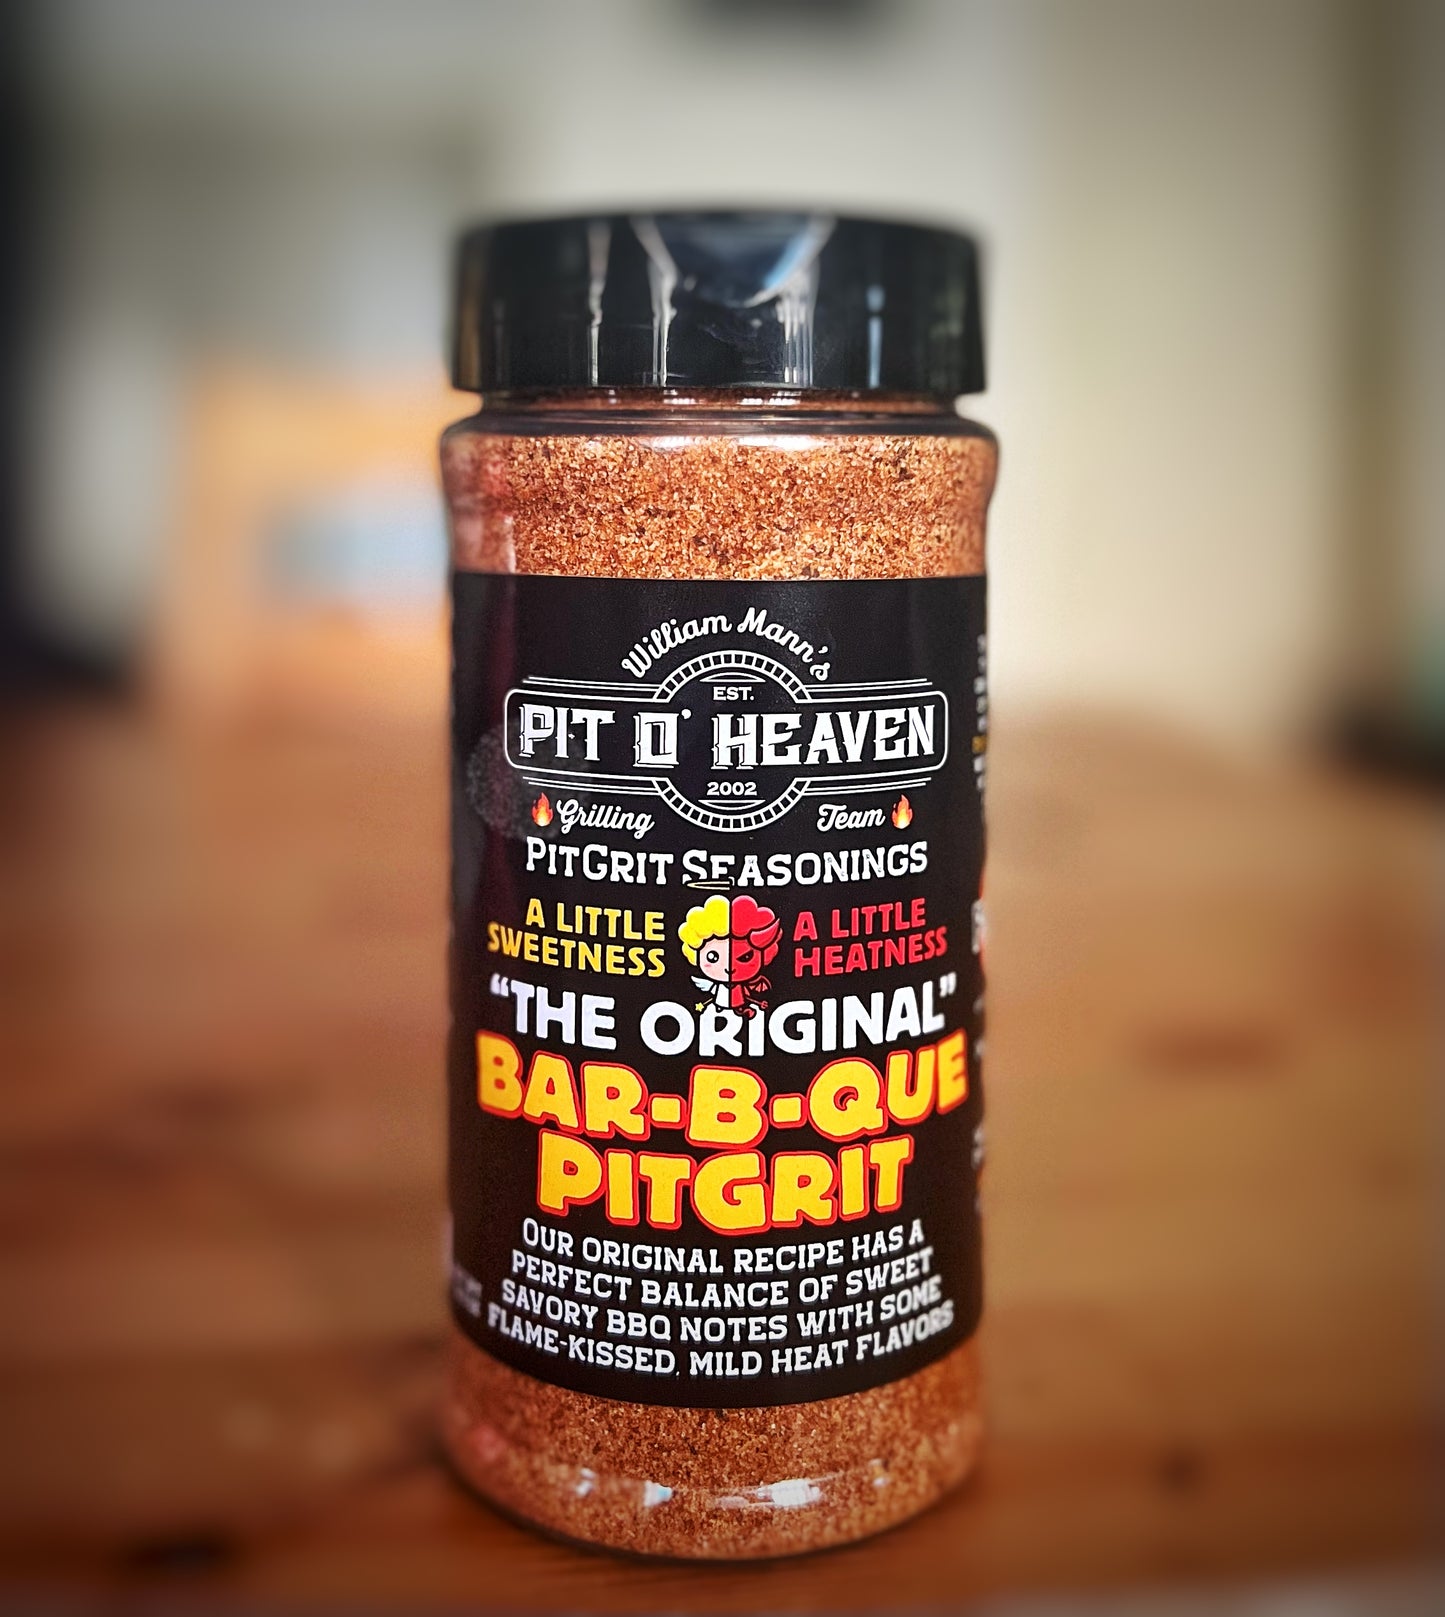 PitGrit Seasonings “The Original” Bar-B-Que PitGrit